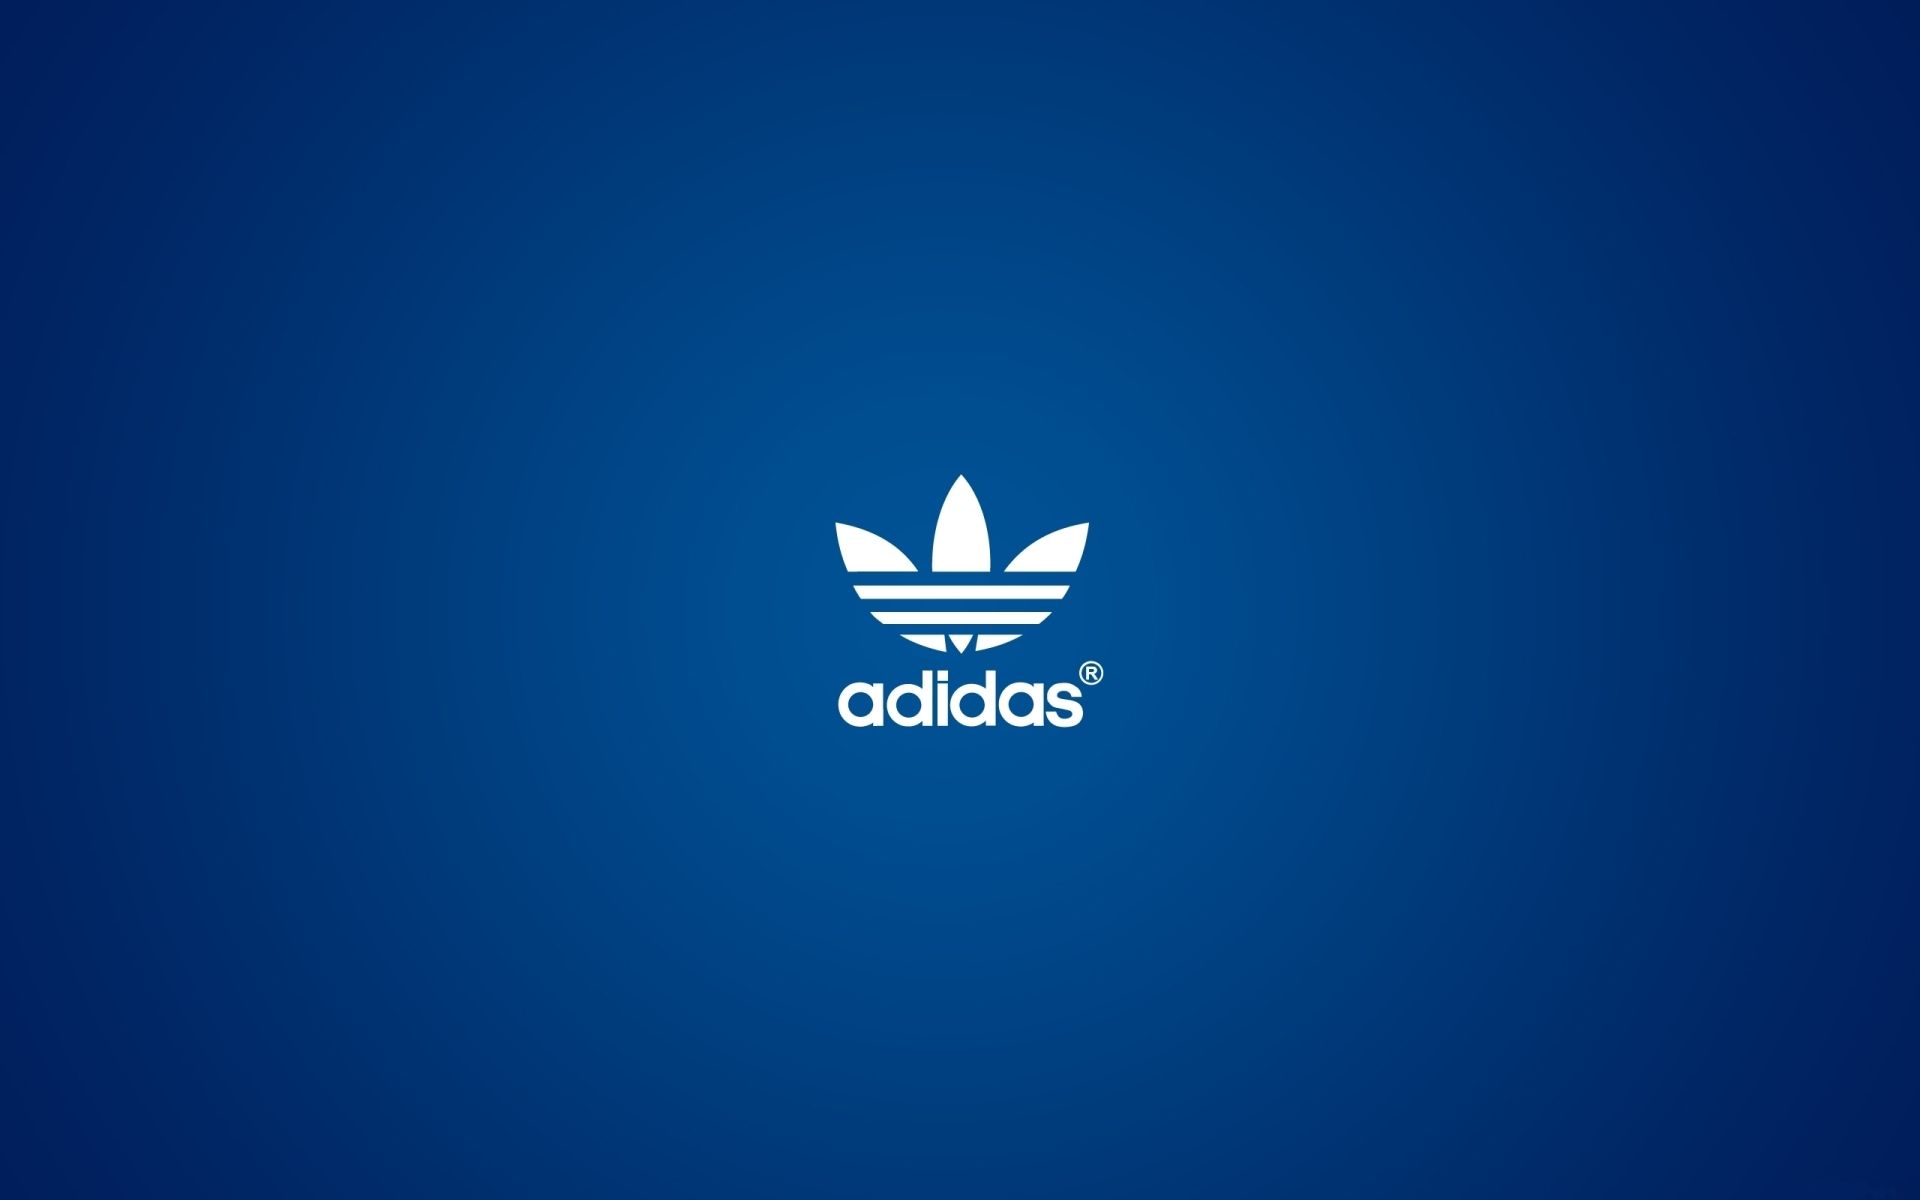 Adidas Wallpaper HD. Adidas wallpaper, Adidas logo wallpaper, Adidas background